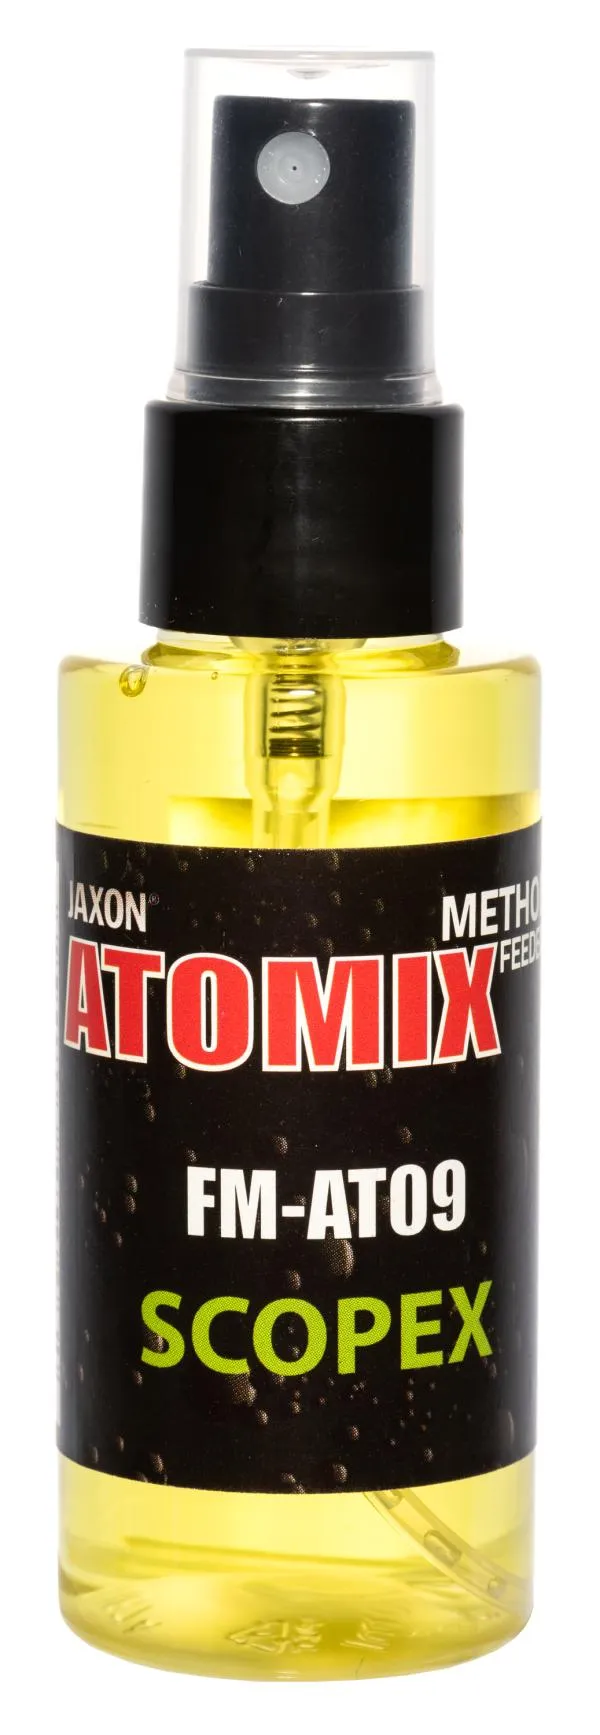 JAXON ATOMIX - SCOPEX 50g aroma